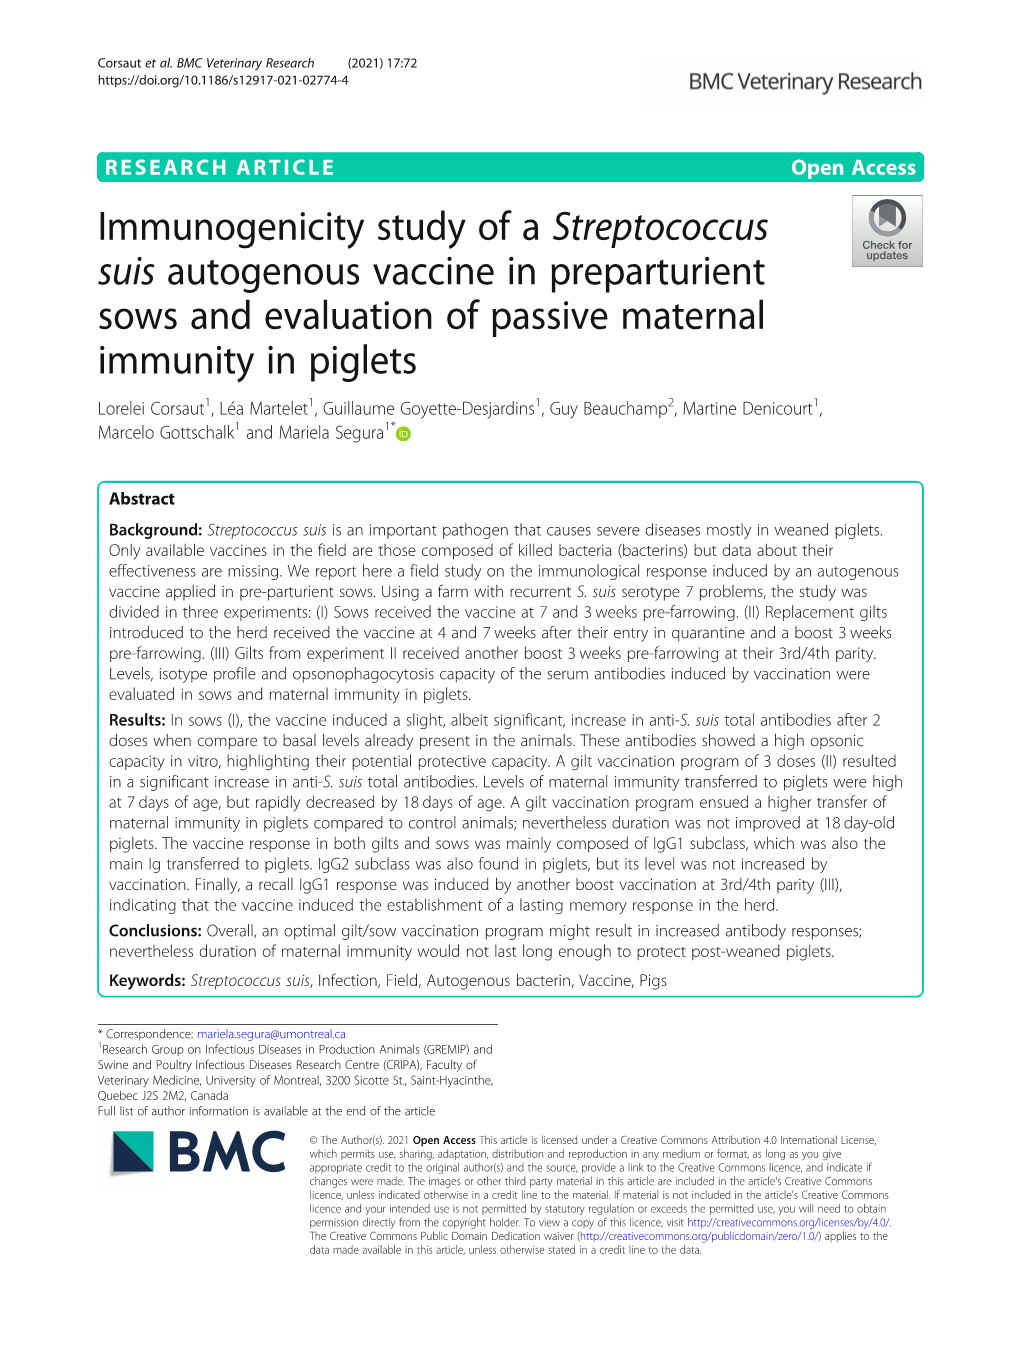 Immunogenicity Study of a Streptococcus Suis Autogenous